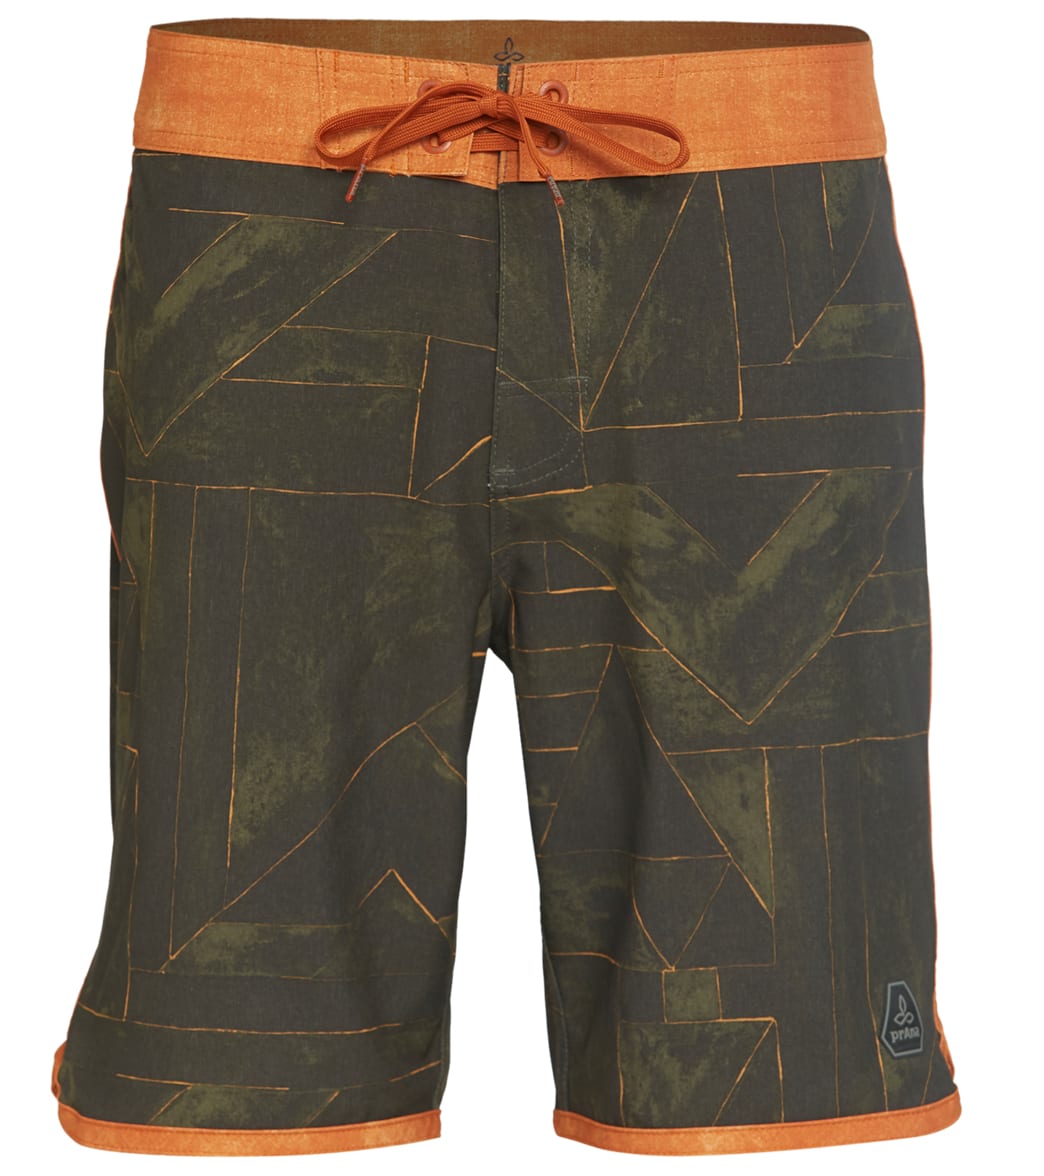 Prana Men's High Seas 20 Board Shorts - Slate Glow 35 Cotton/Polyester - Swimoutlet.com